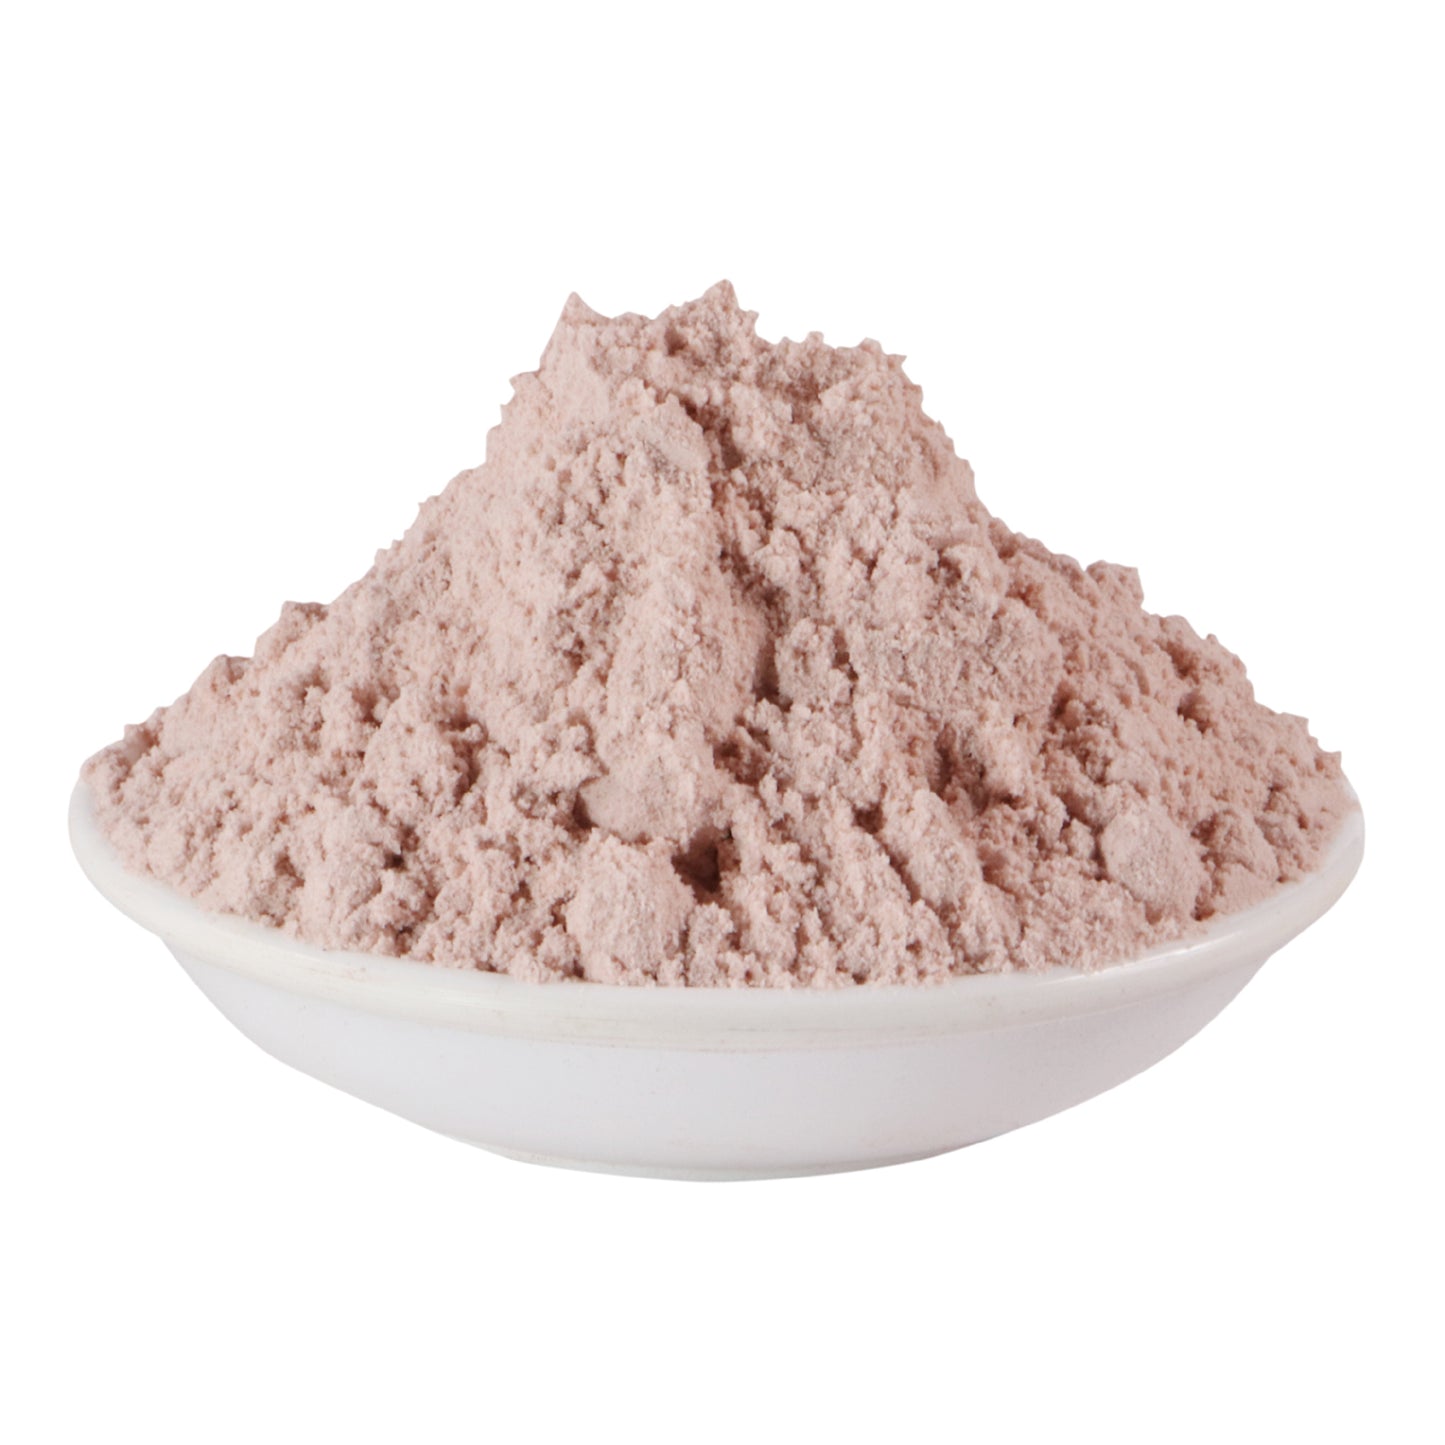 Kala Namak Powder - Black Salt Powder